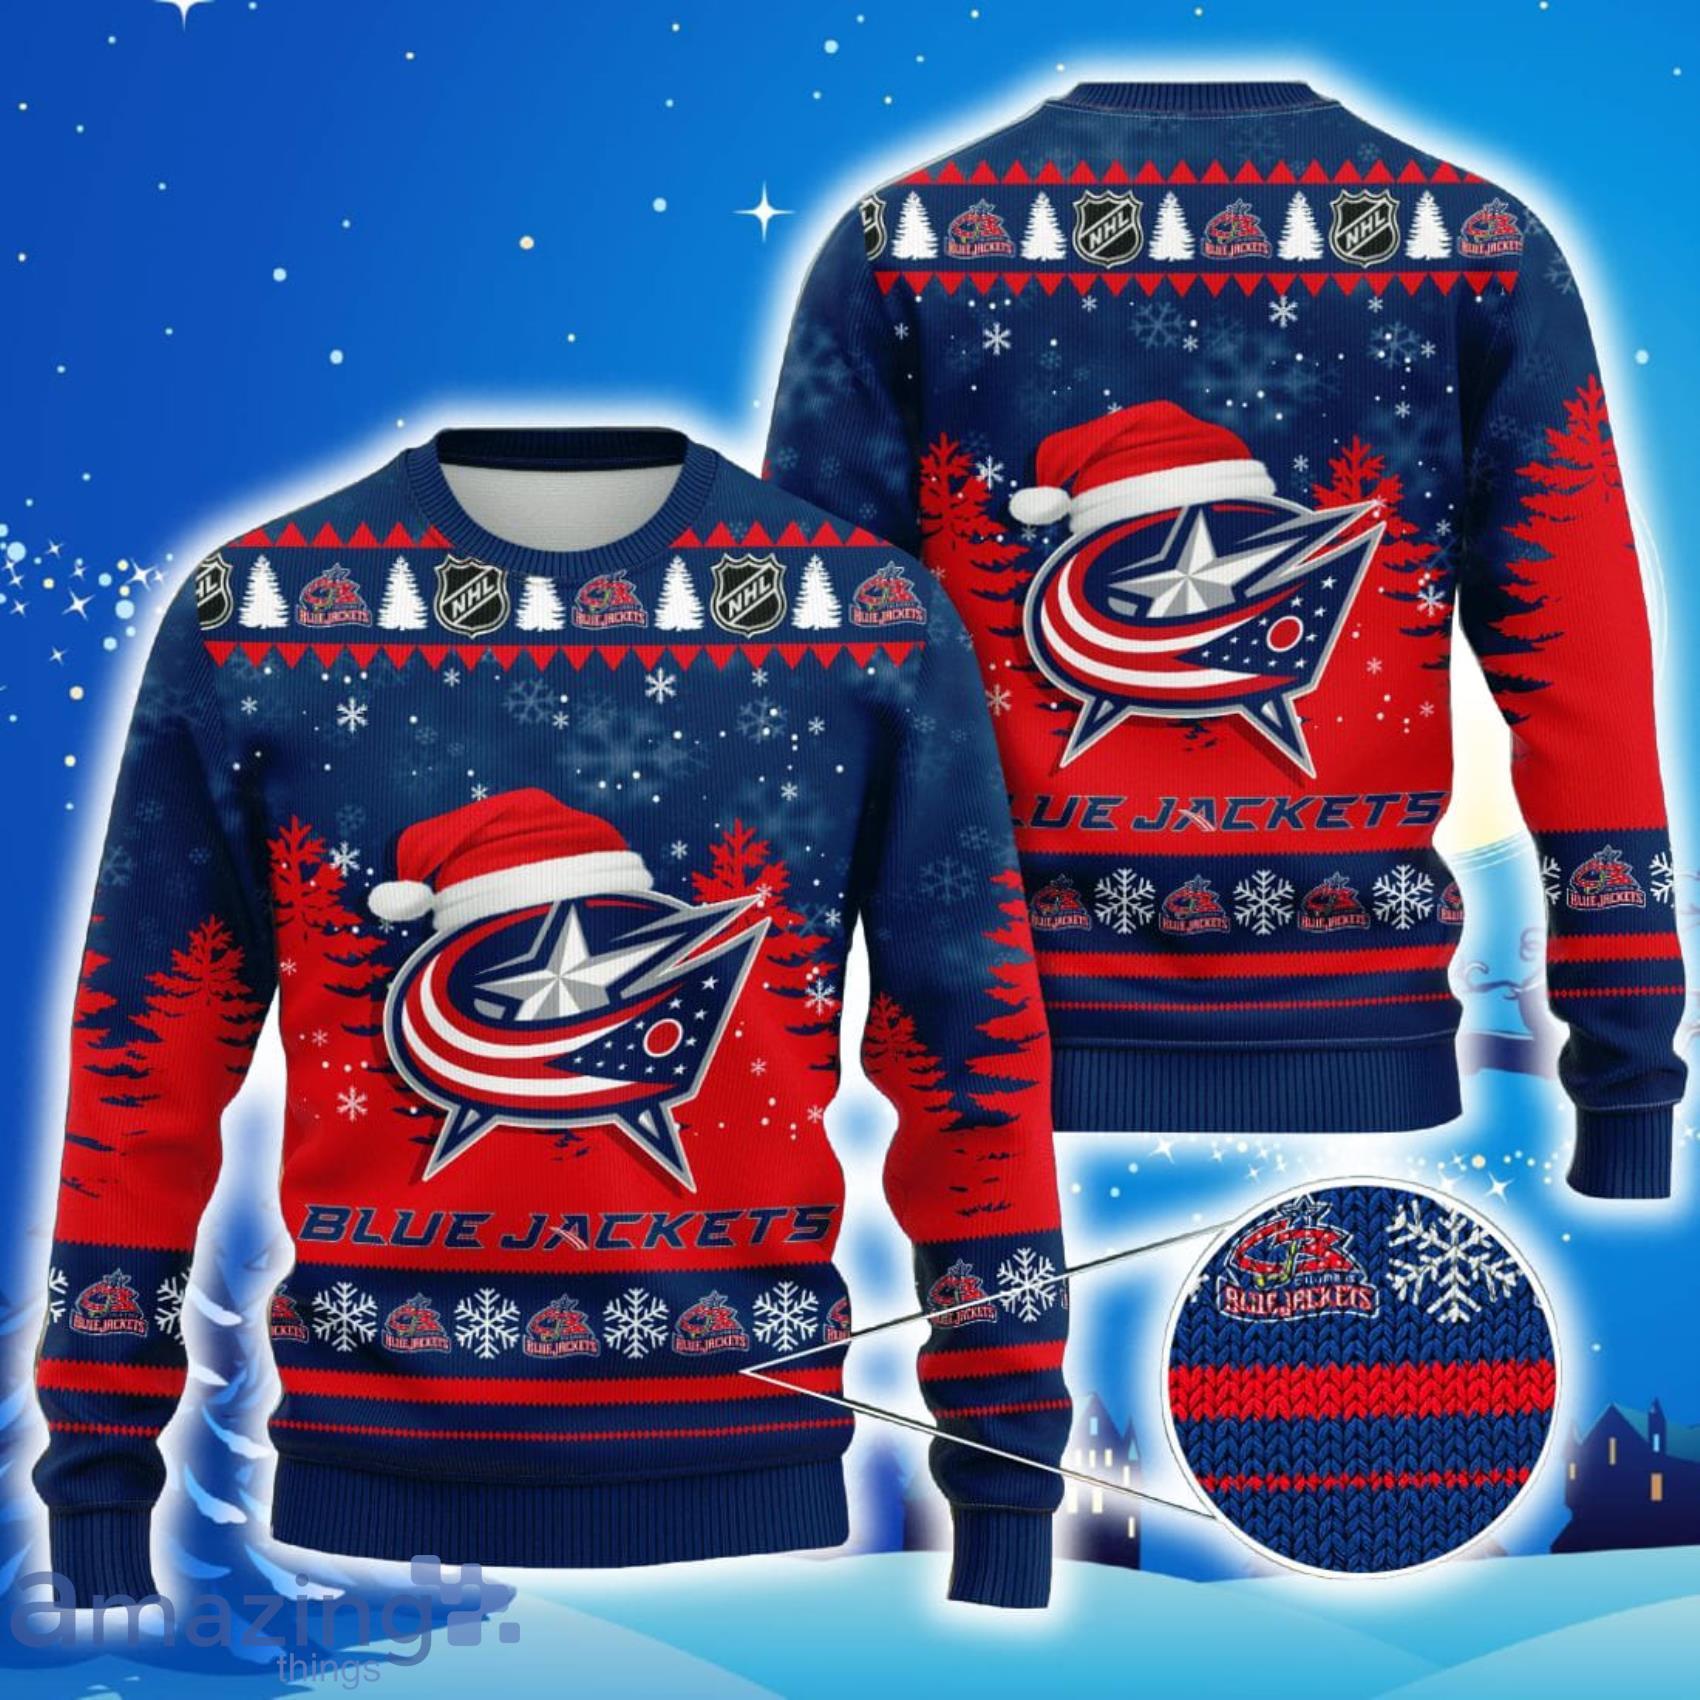 Columbus Blue Jackets (NHL) Christmas Ugly Sweater iPhone …